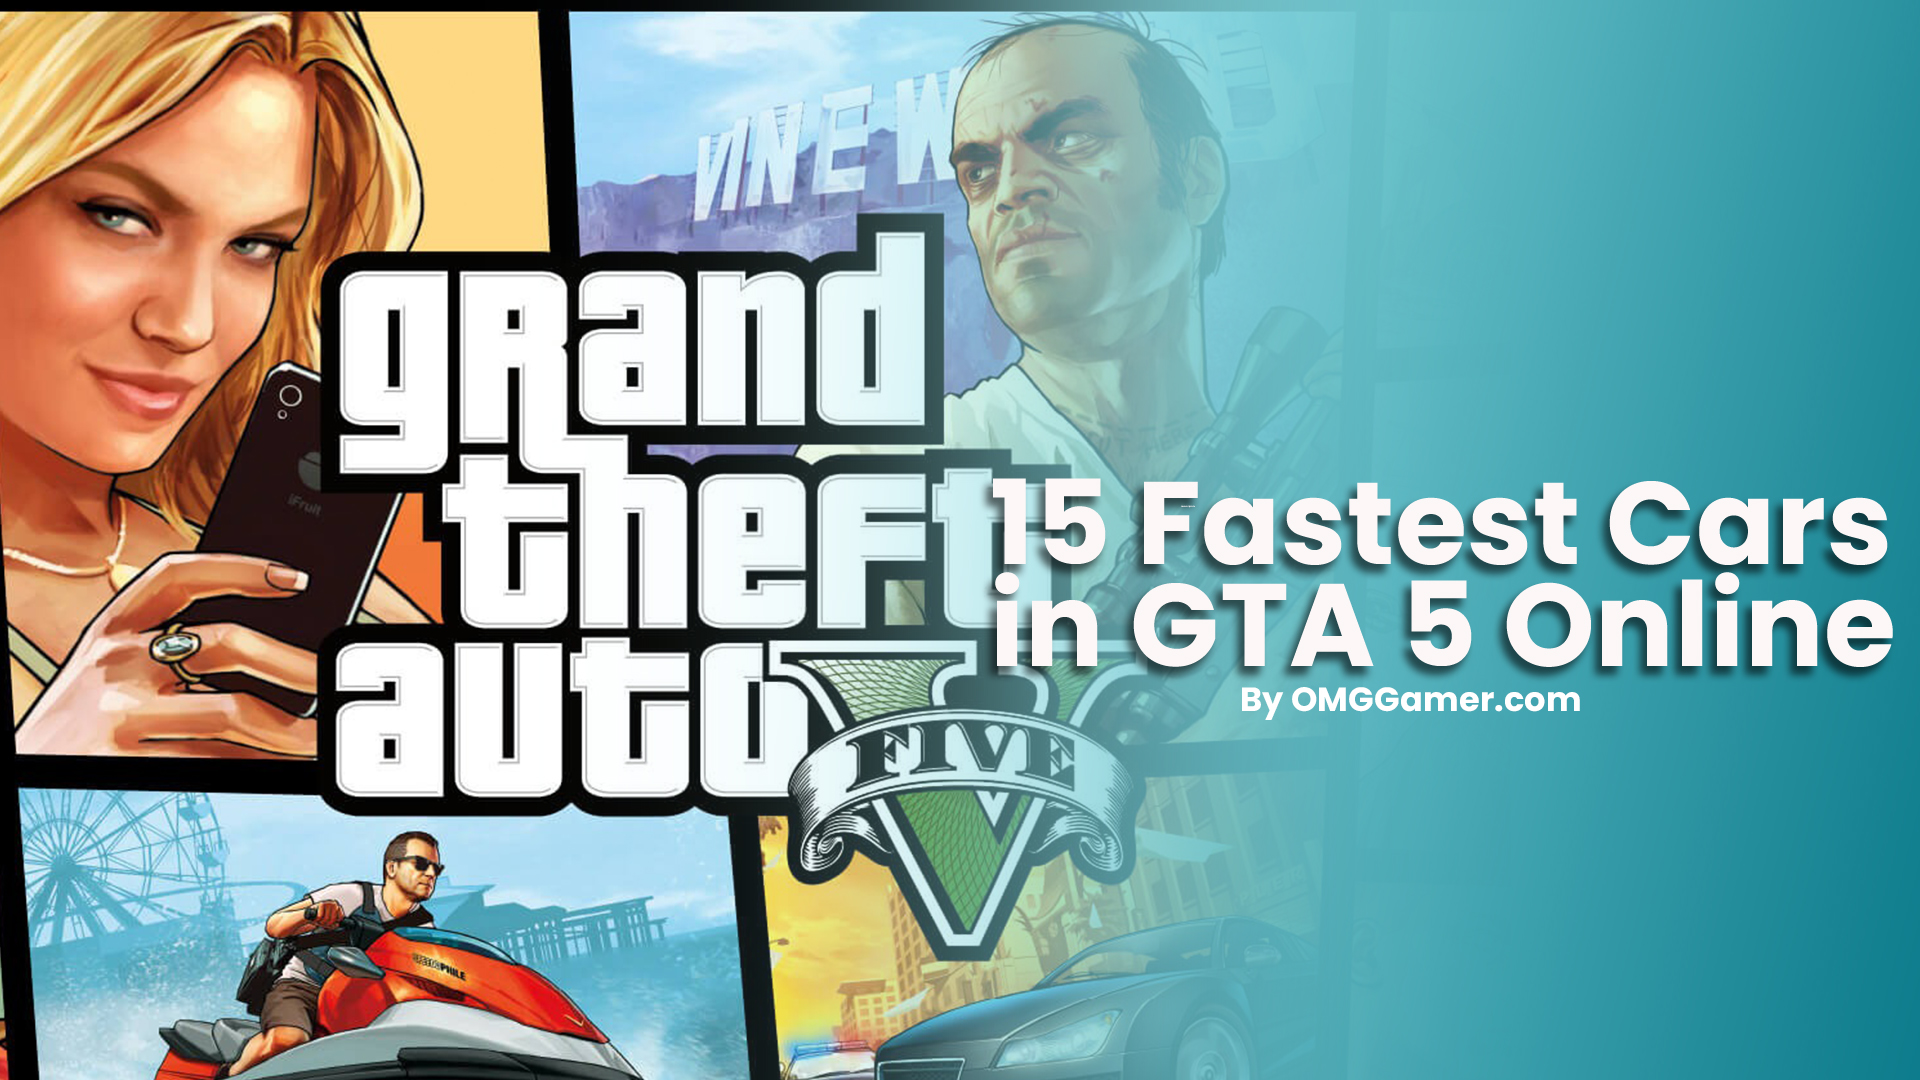 Fastest Cars in GTA 5 Online